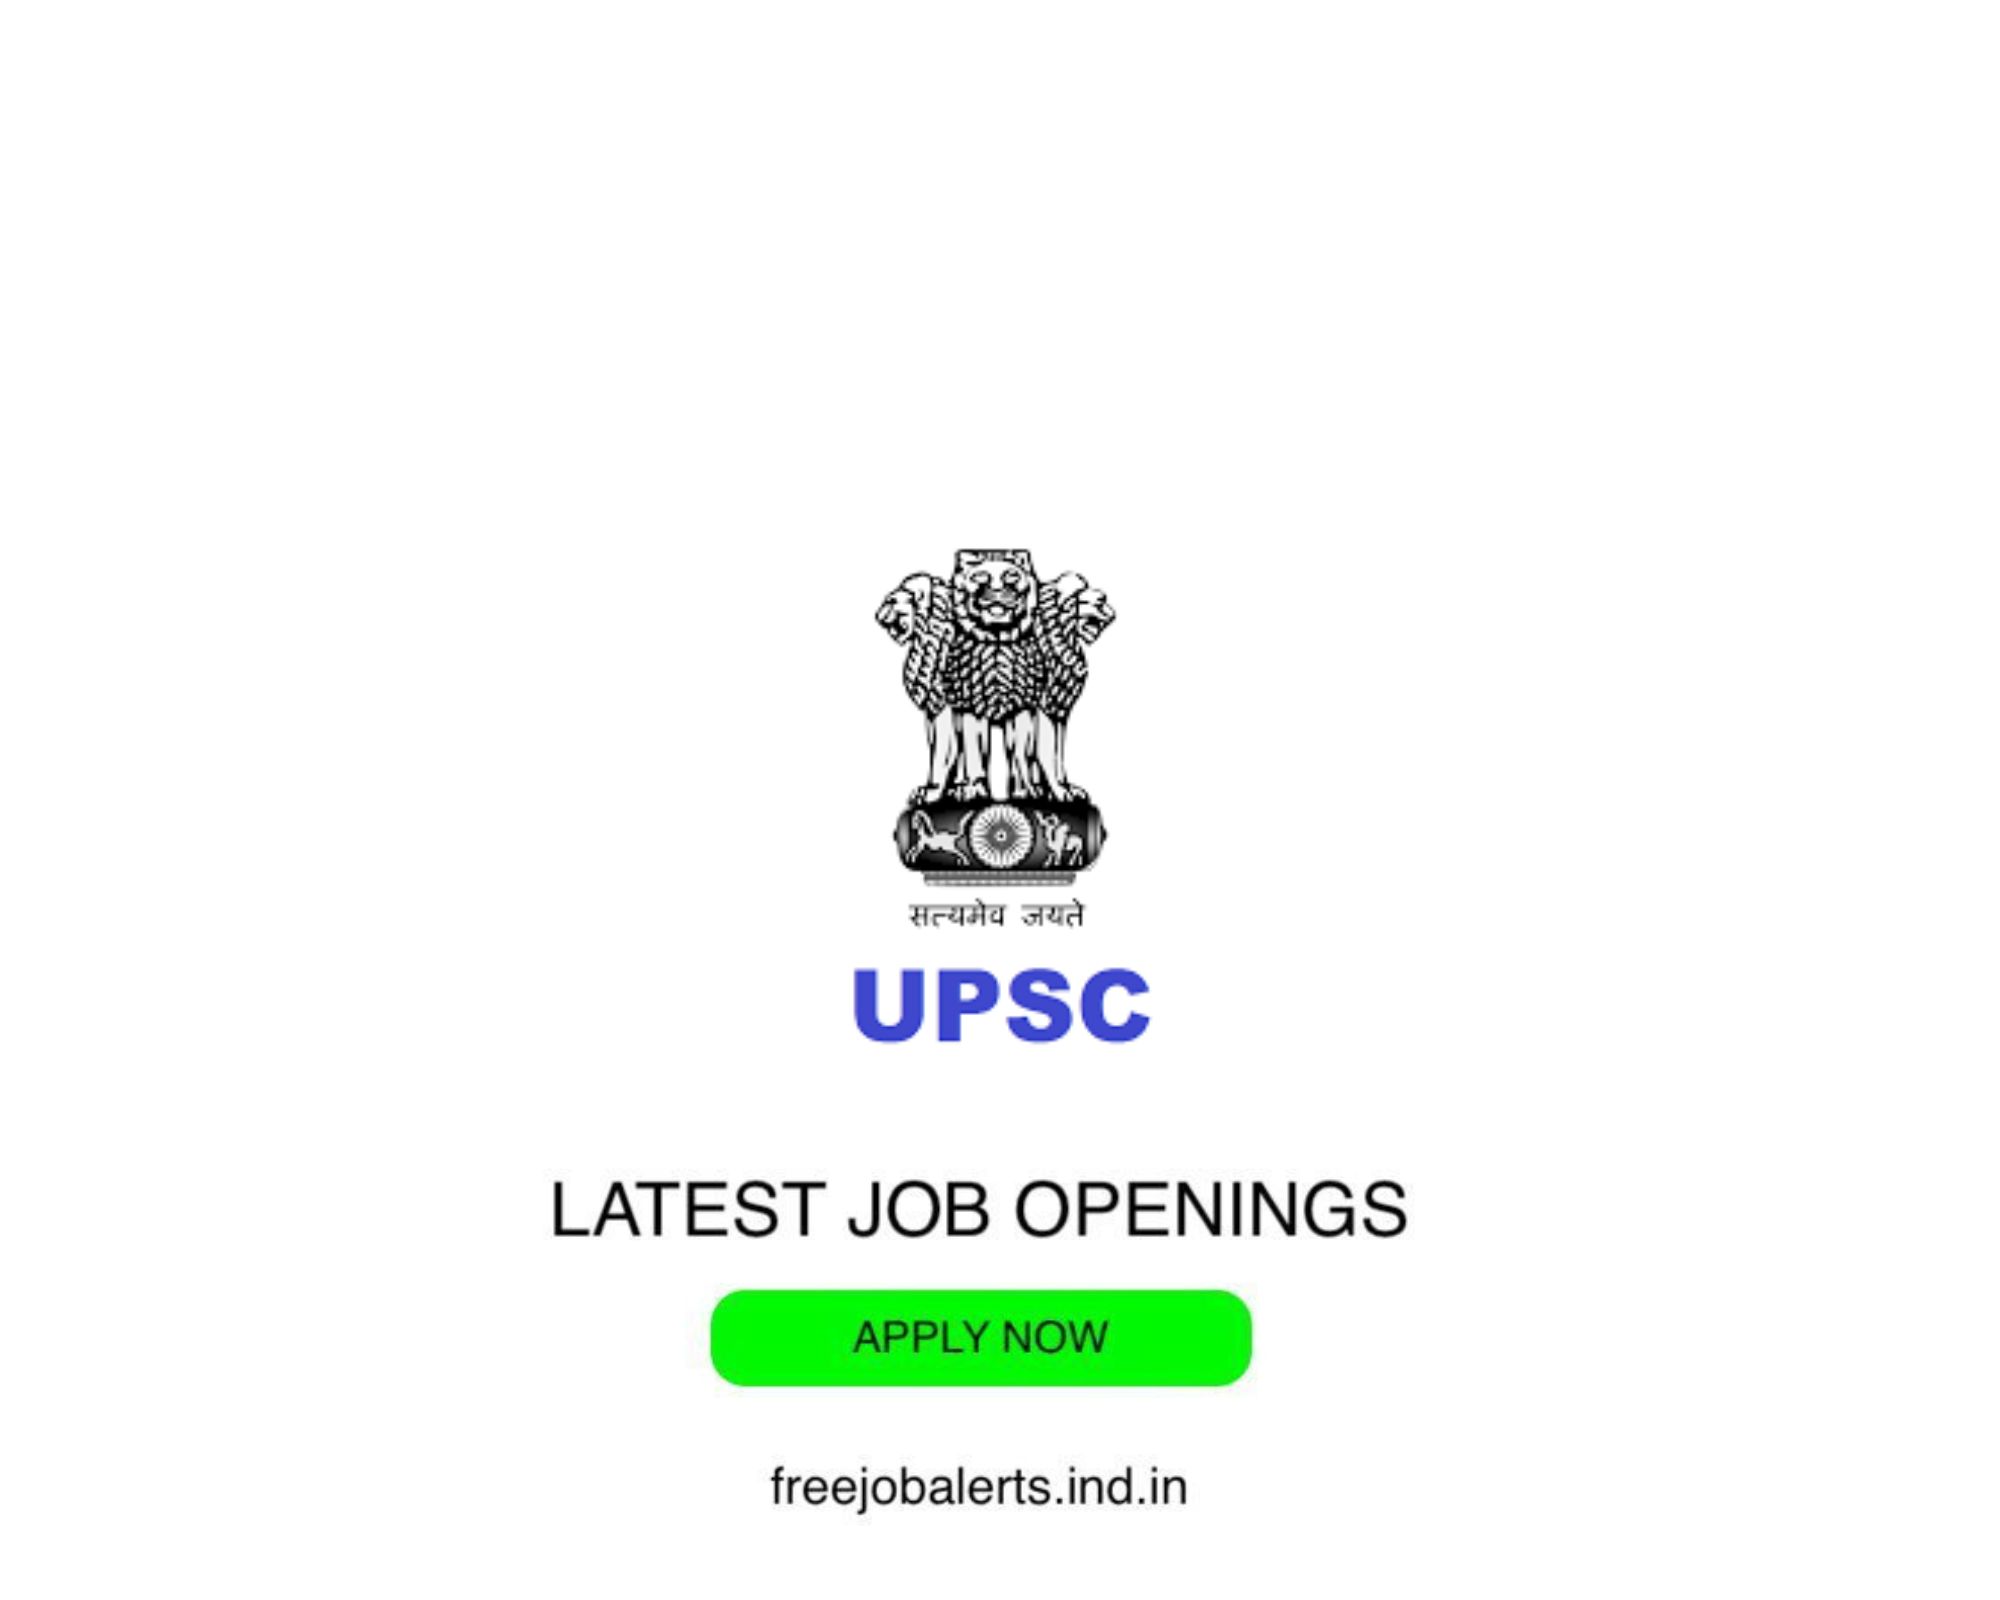 UPSC - Union Public Service Commission - Latest Govt job openings - Free job alerts, Indian Govt Jobs